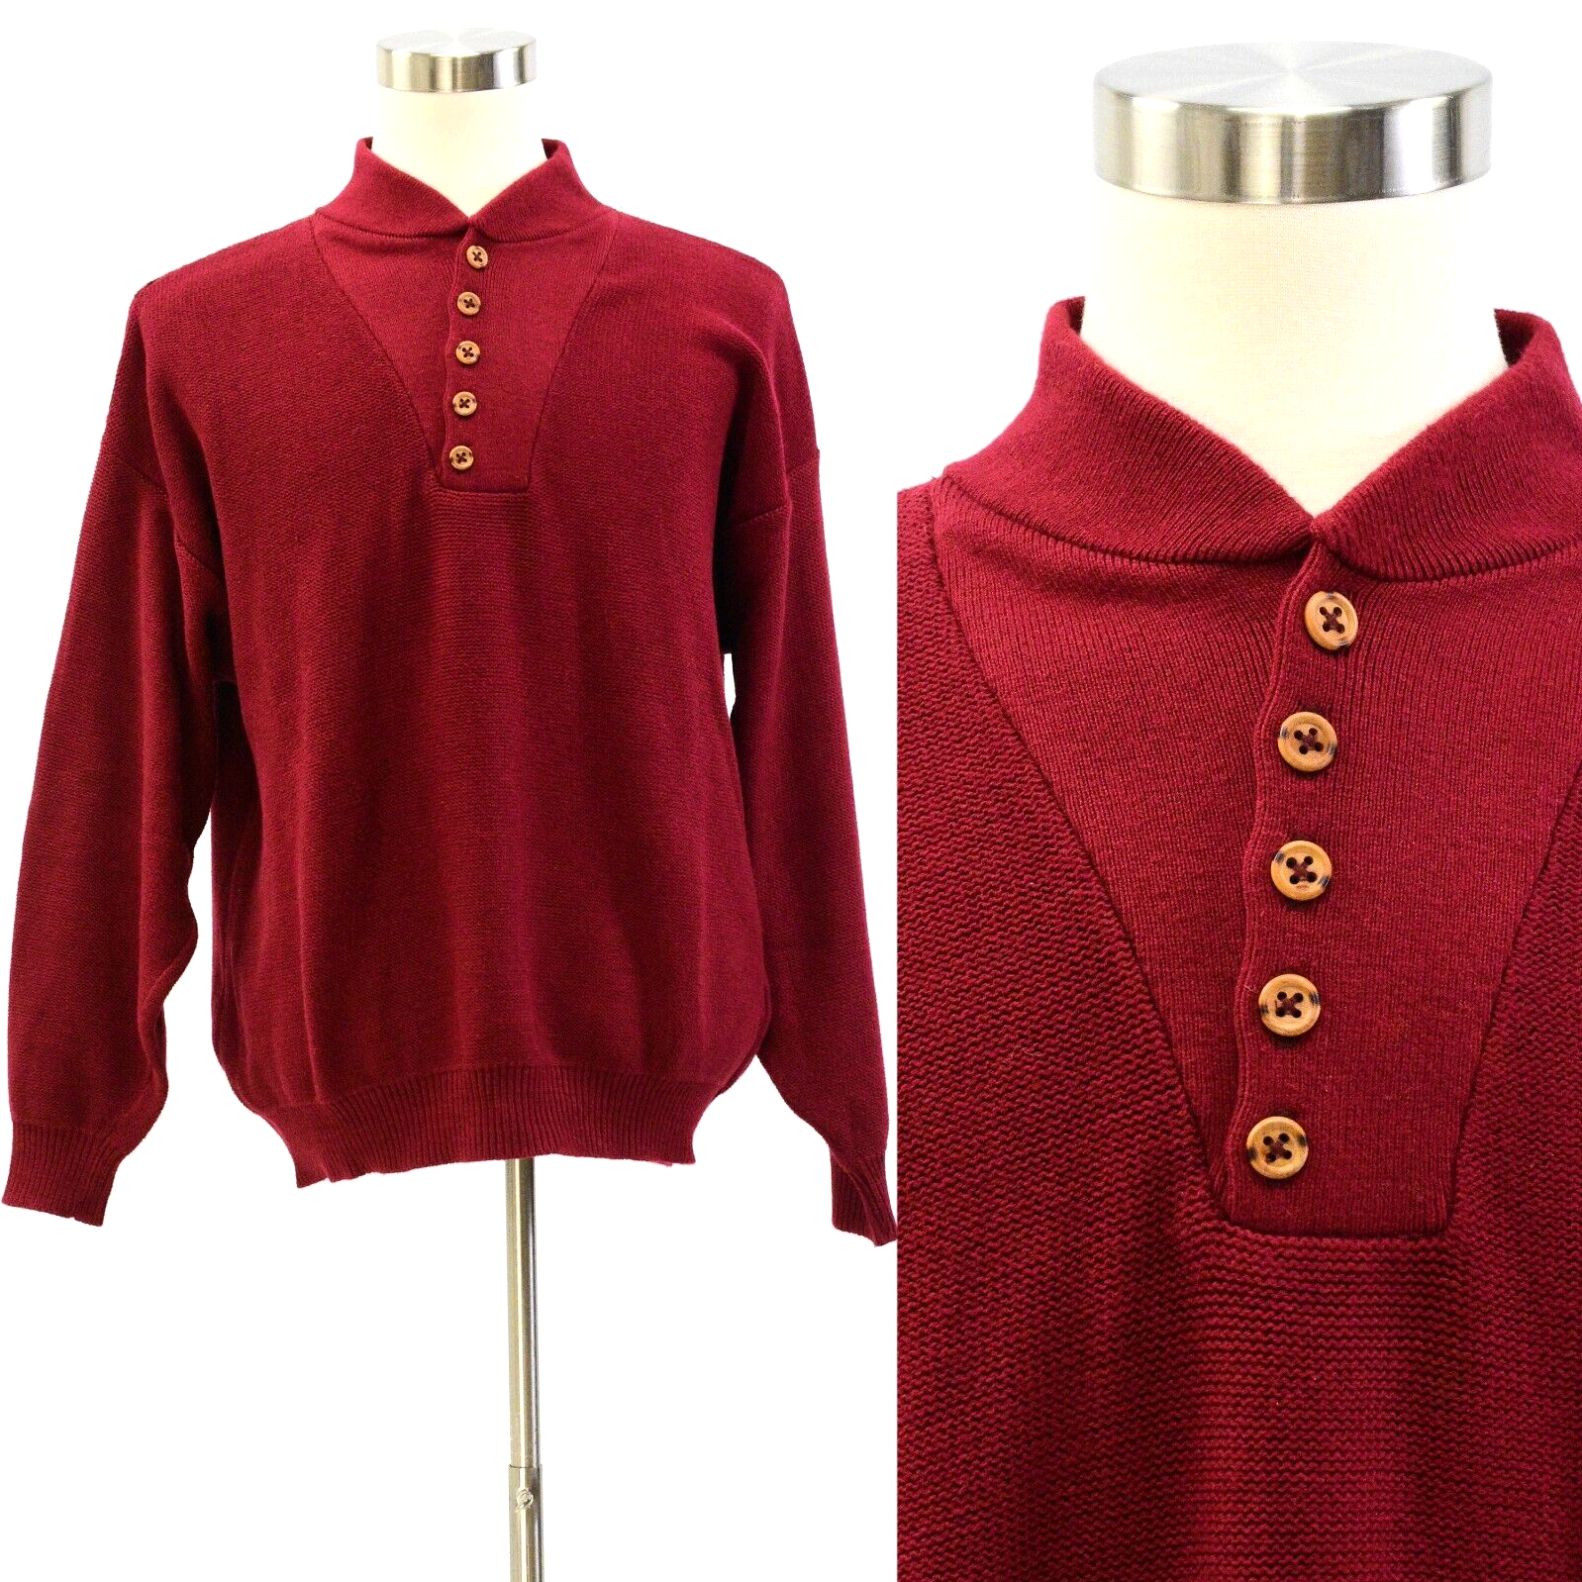 Vintage 90s Vintage Mens L Brick Red Lands' End Henley Sweater Knit Cotton Relaxed Fit Size US L / EU 52-54 / 3 - 1 Preview